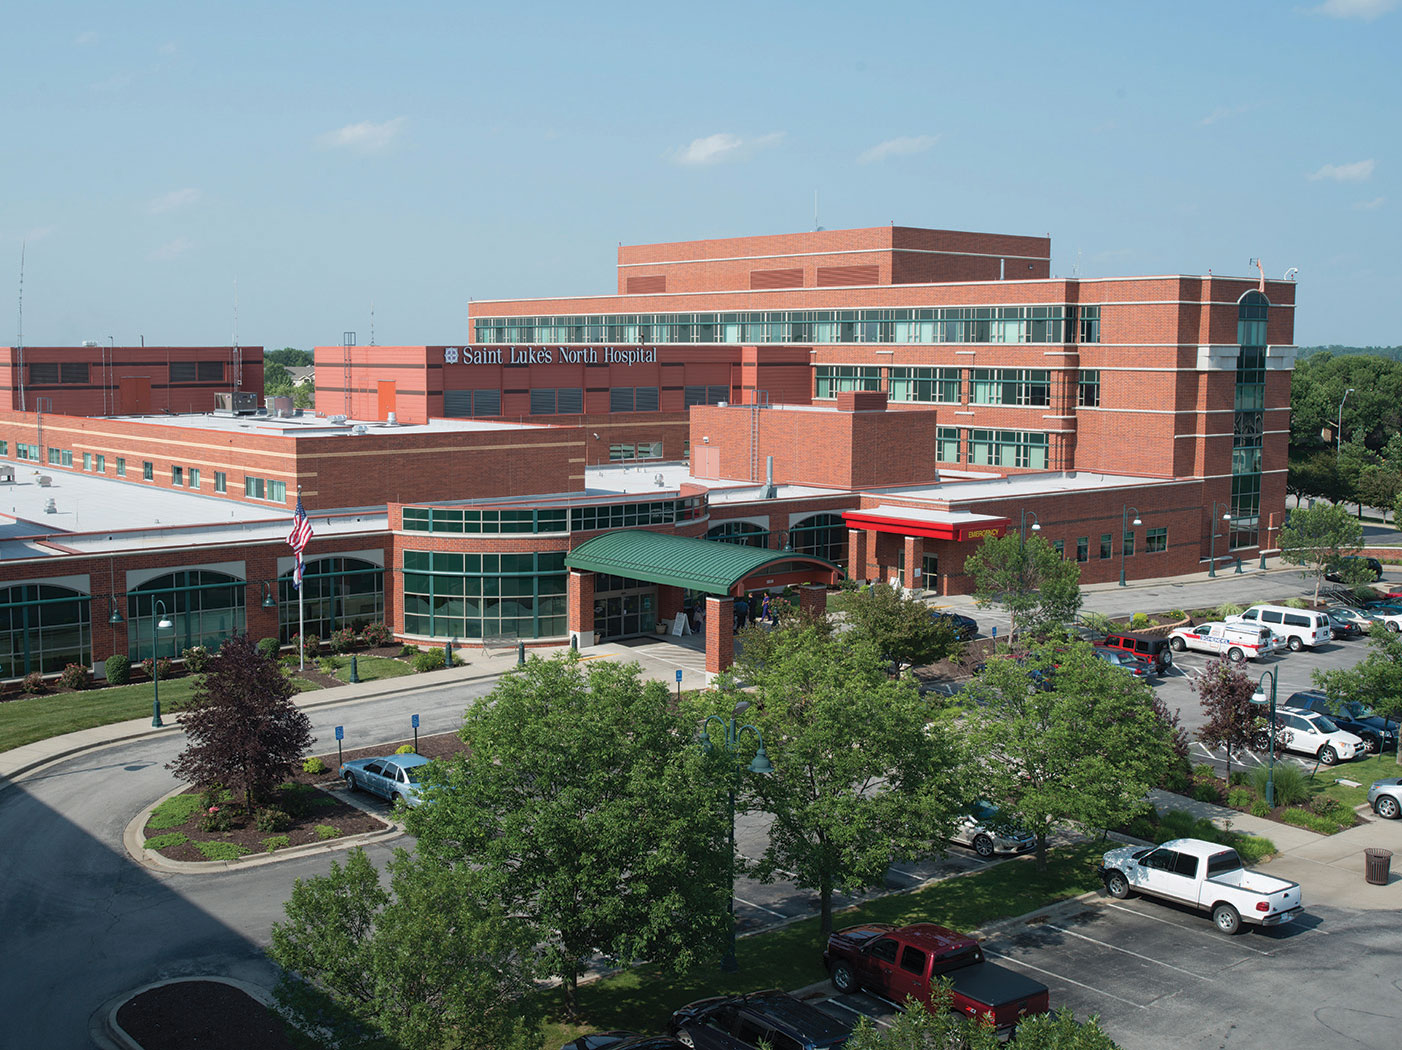 Saint Luke's North Hospital - Barry Road Maternity Center